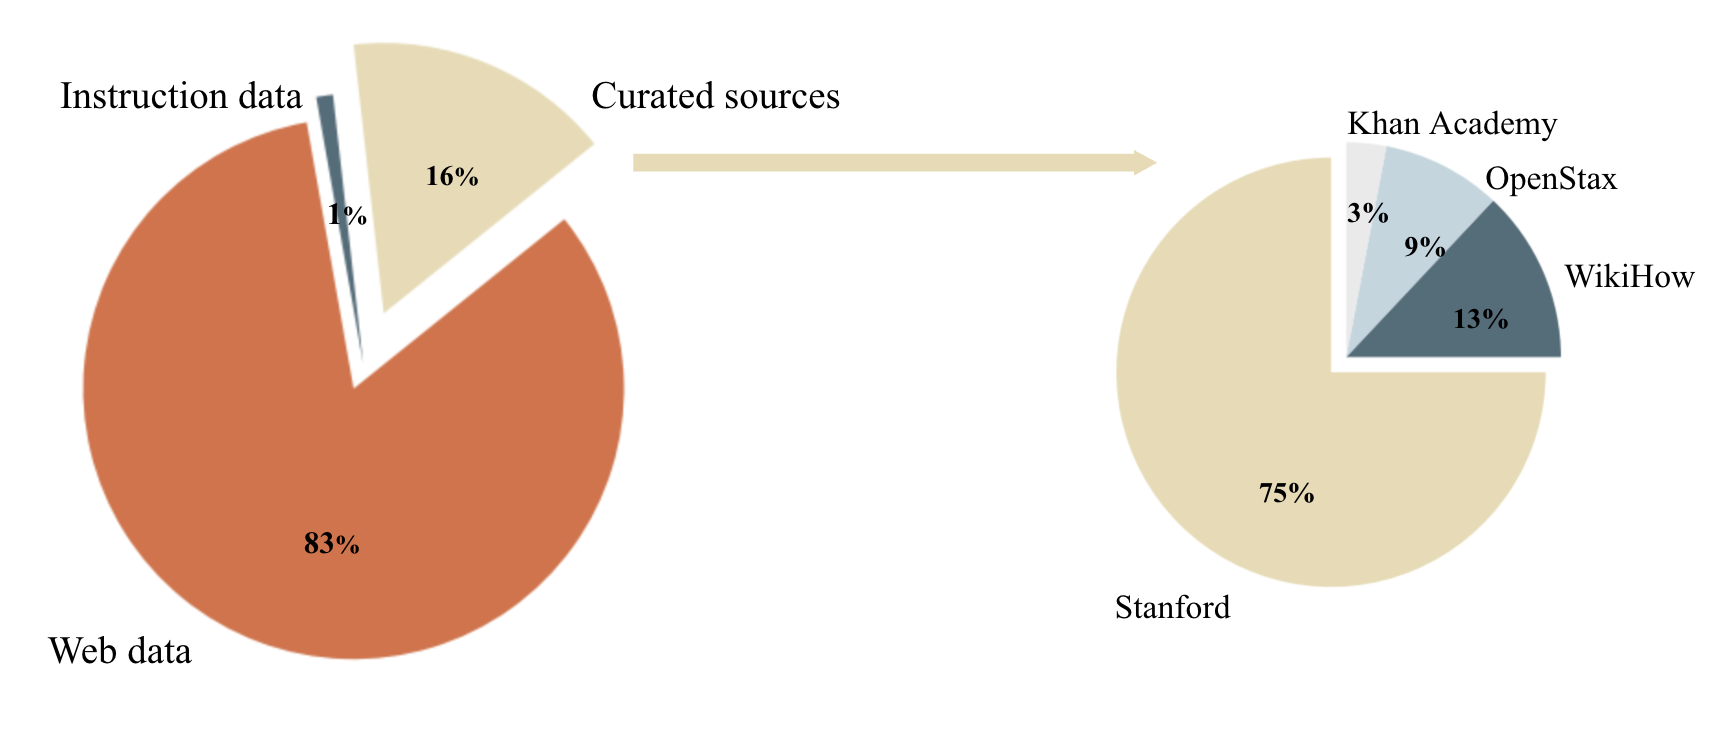 piecharts of data sources